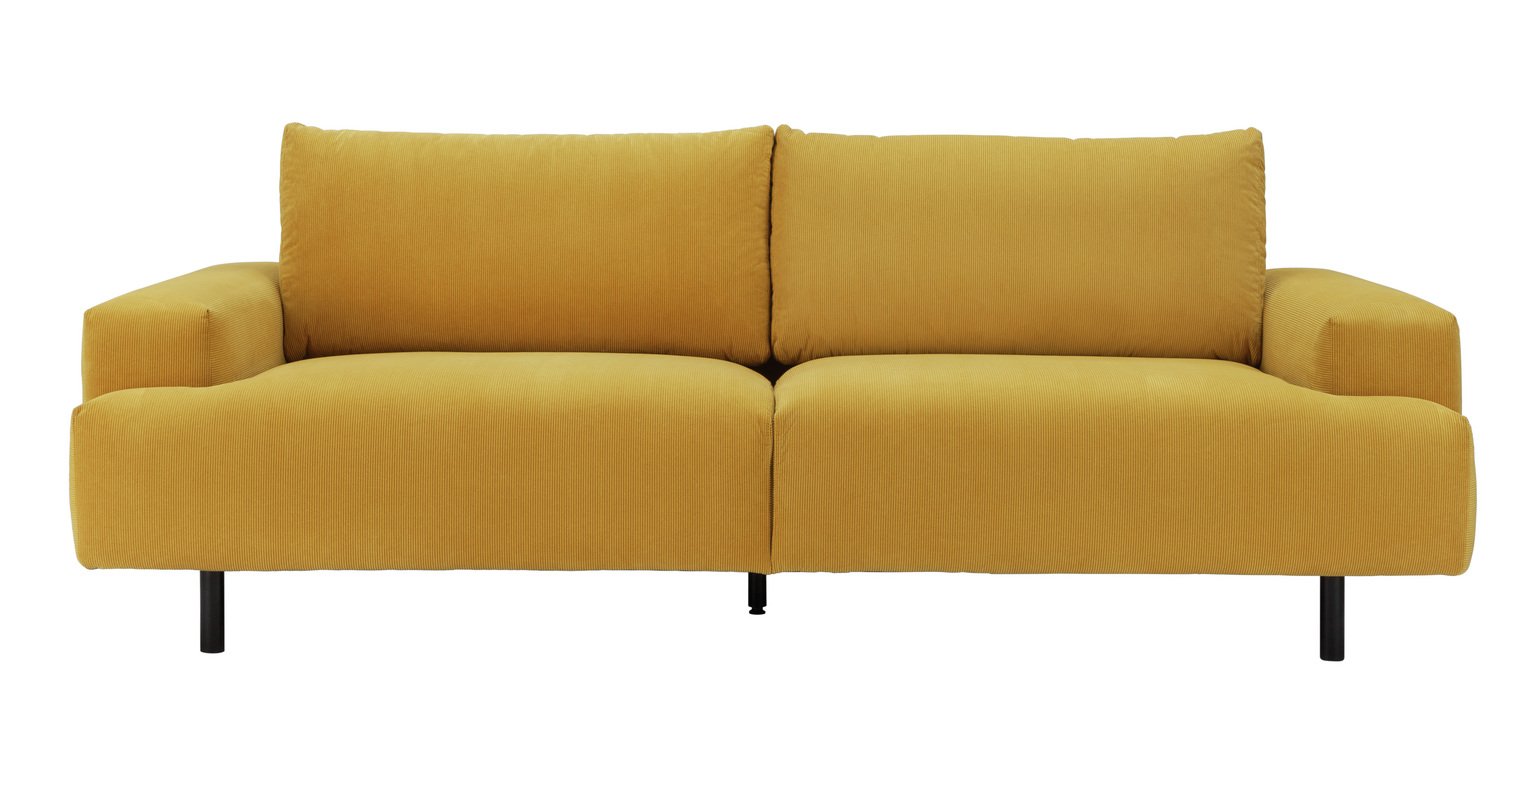 Habitat Julien 3 Seater Fabric Sofa - Yellow